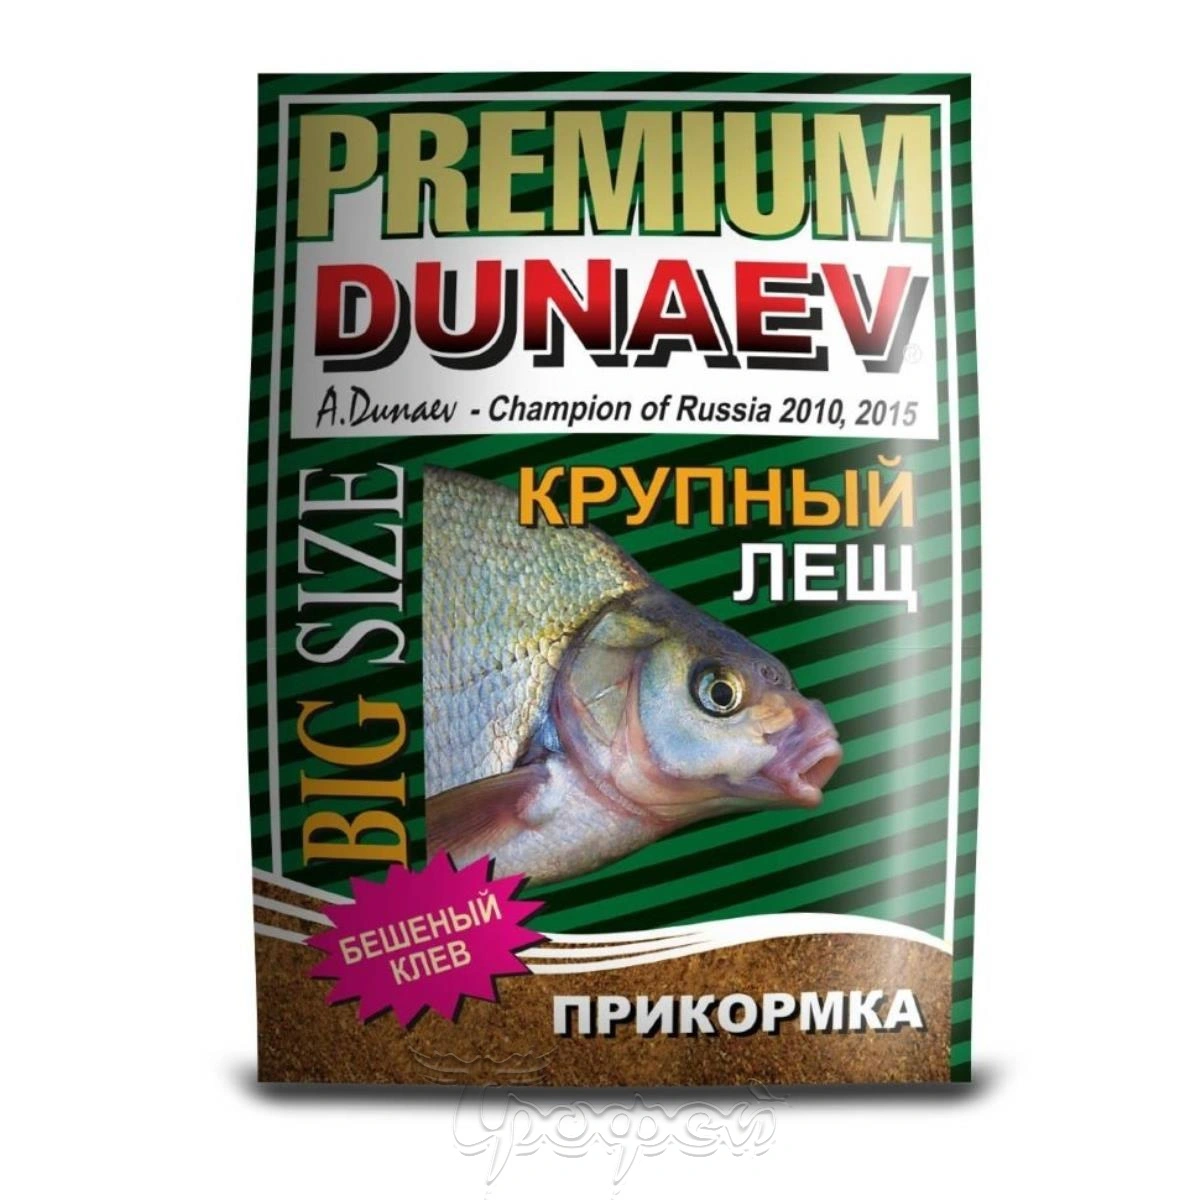 Прикормка дунаева. Прикормка "Dunaev-Premium" 1кг лещ крупная фракция. Прикормка "Dunaev-Premium" крупная фракция, 1 кг. Крупный лещ прикормка Дунаев премиум. Dunaev Premium крупный лещ.